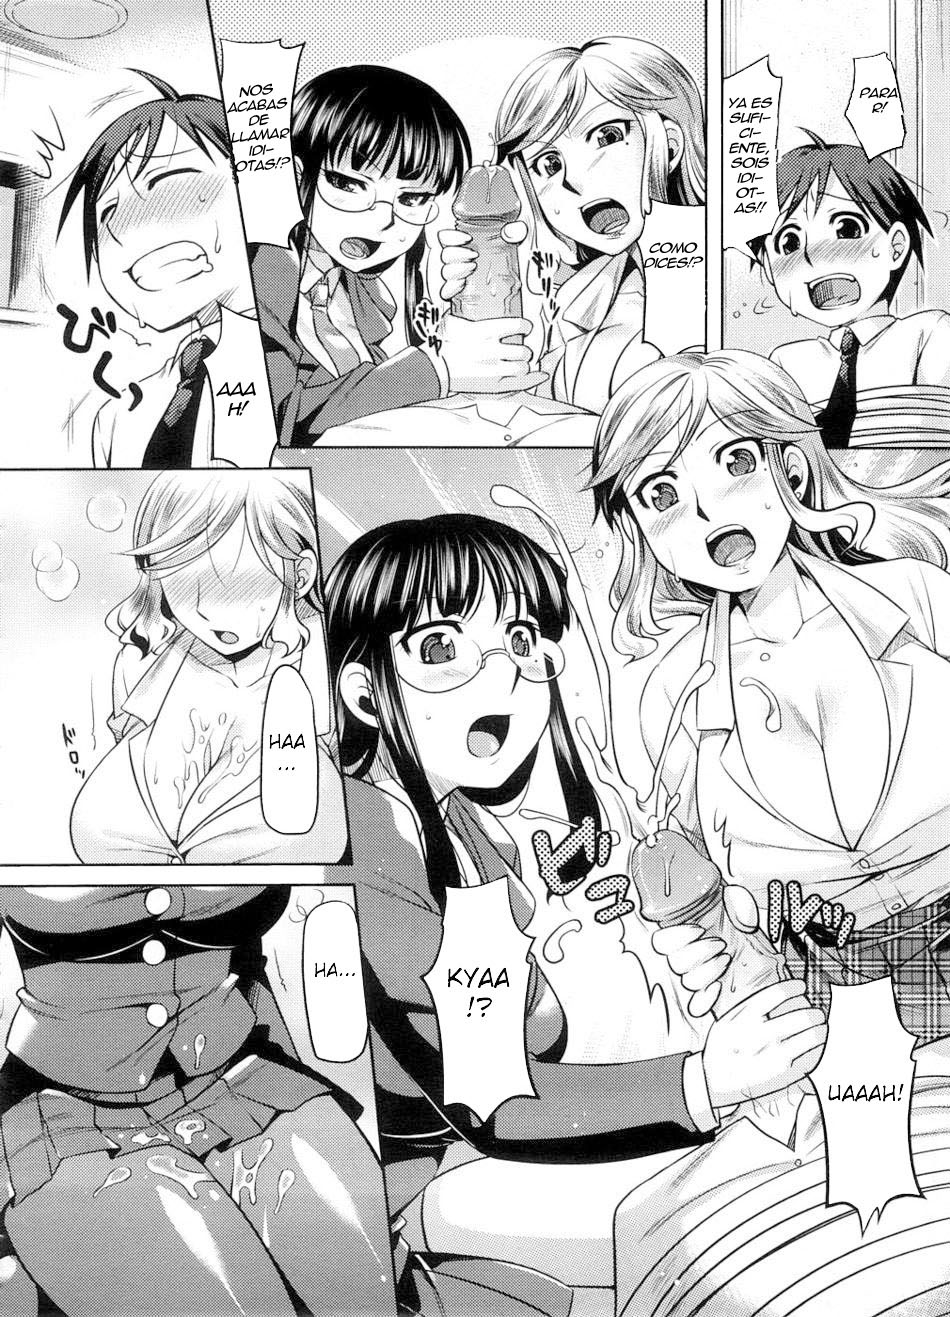 Hermanas Abusivas - 8 - Comics Porno - Hentai Manga - Cartoon XXX